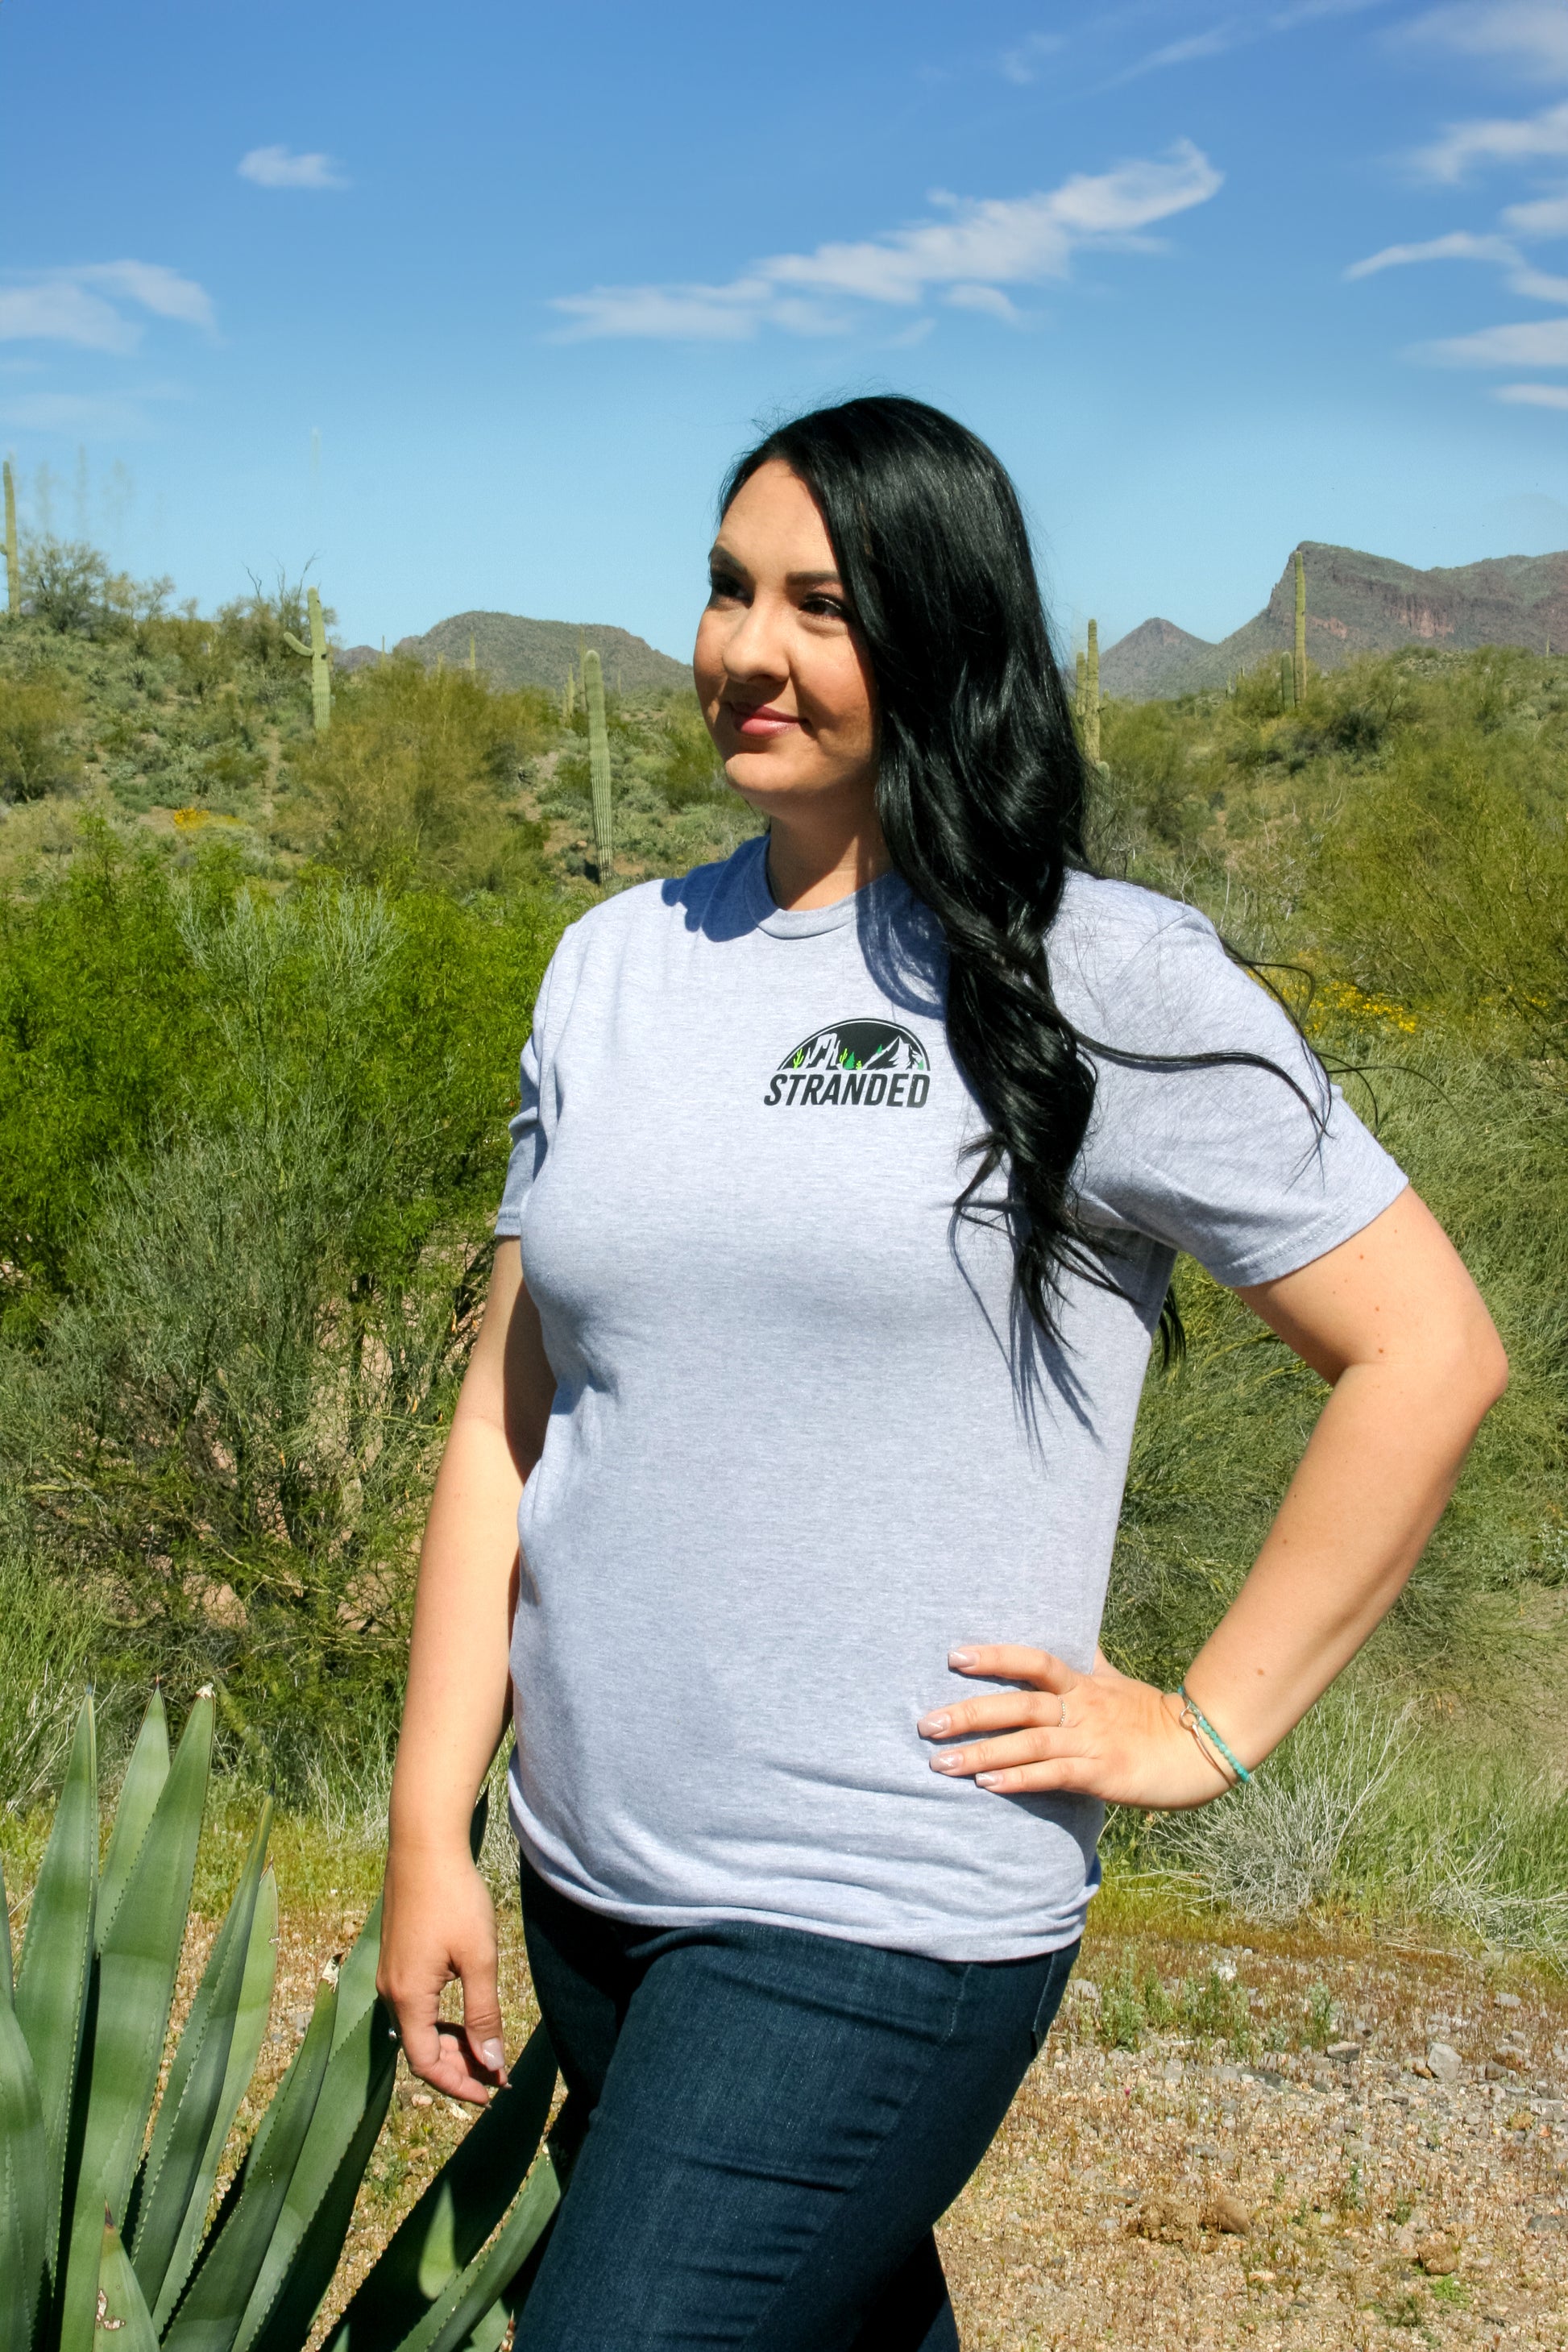 Representing Arizona in our Take a Hike shirt